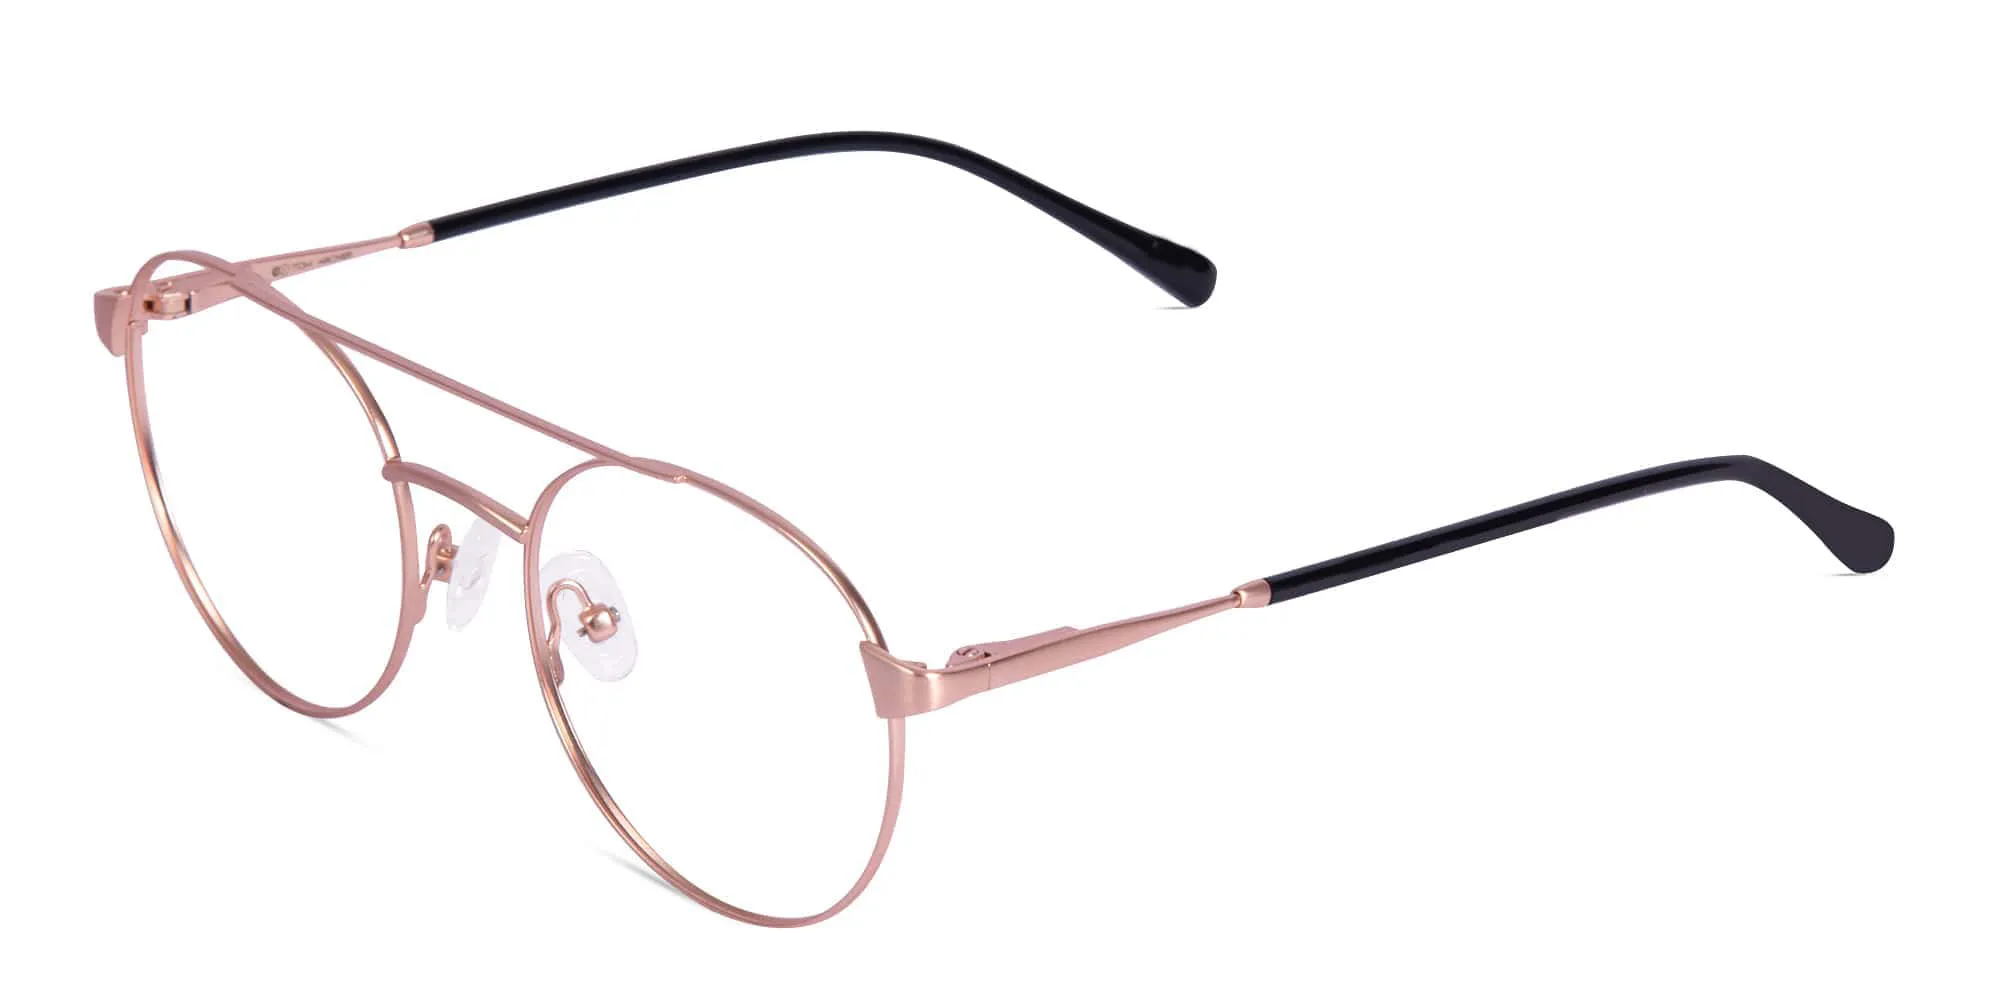 Matte Rose Gold Pilot Glasses Frames